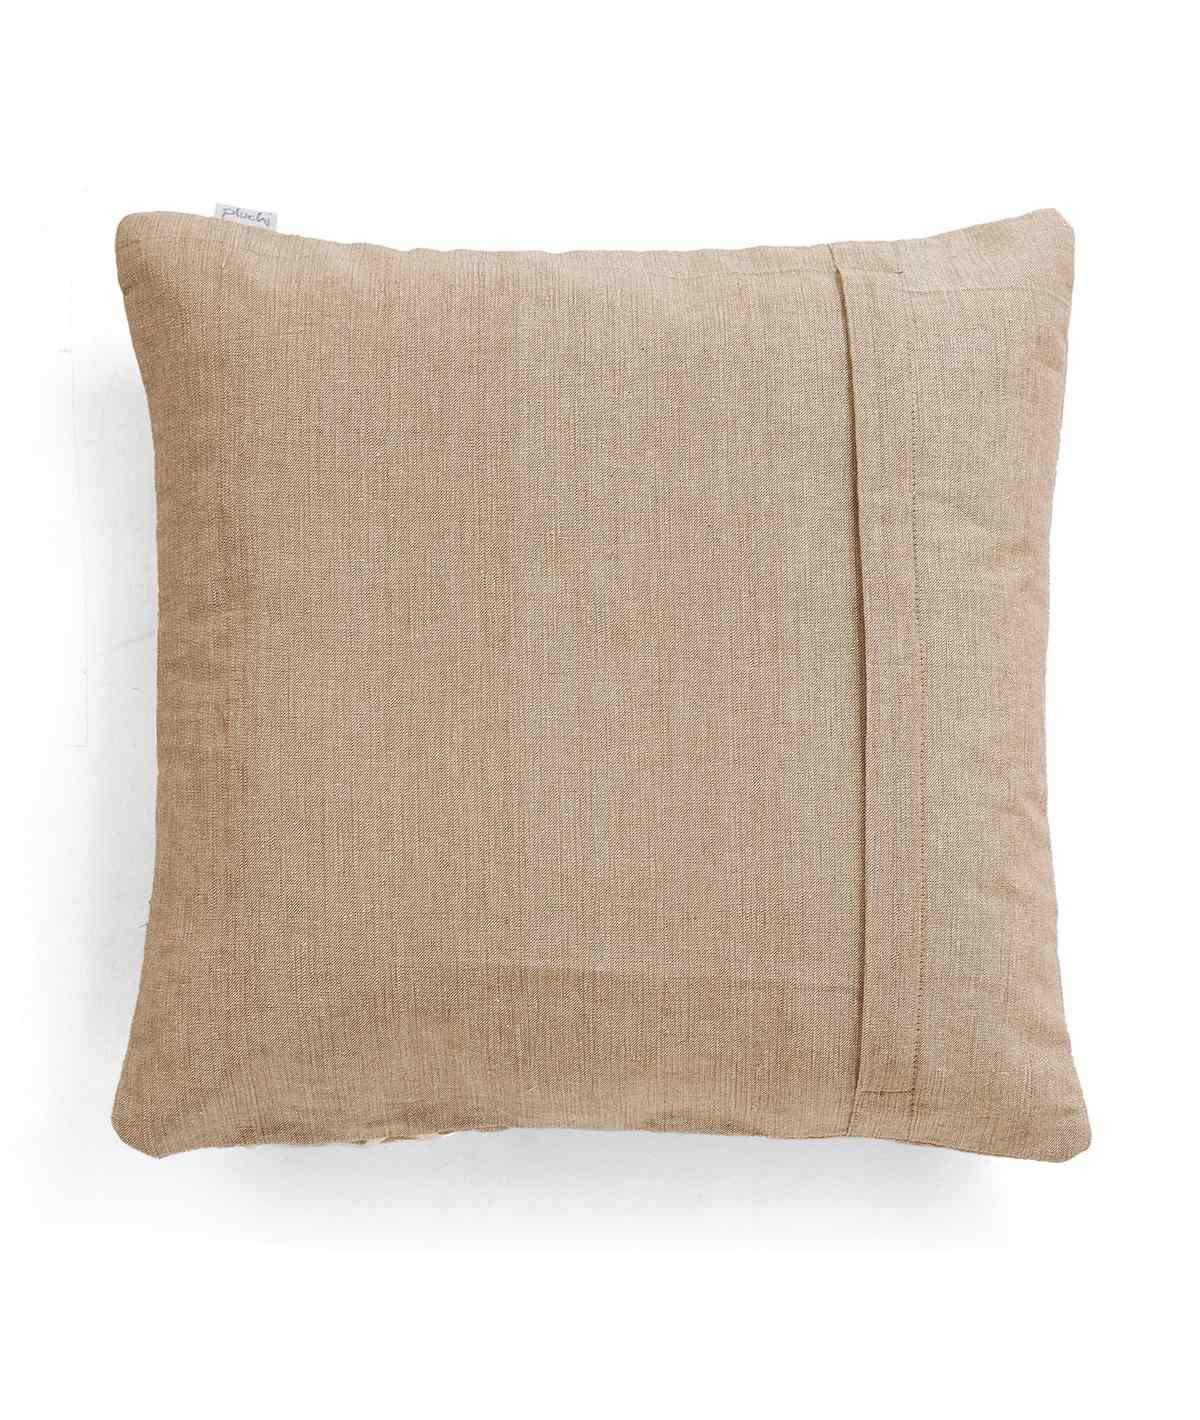 Buy cushion covers